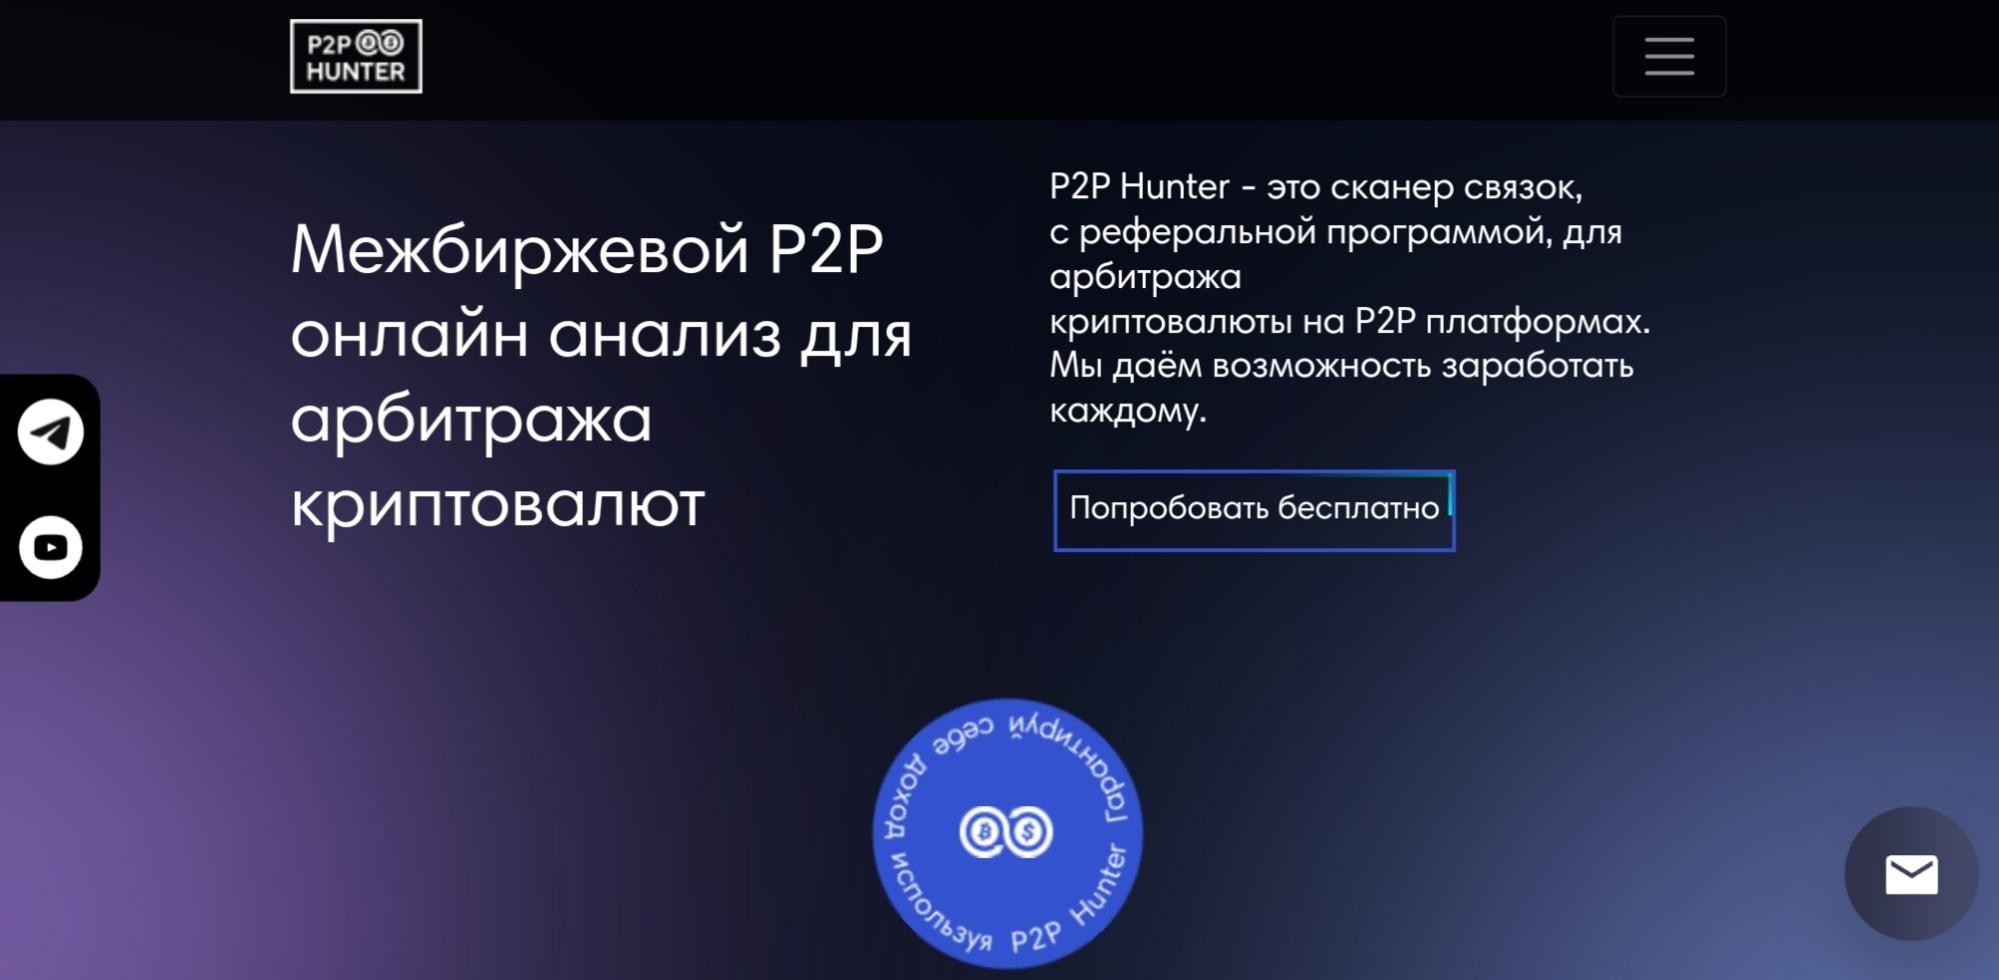 p2p хантер обзор сайта